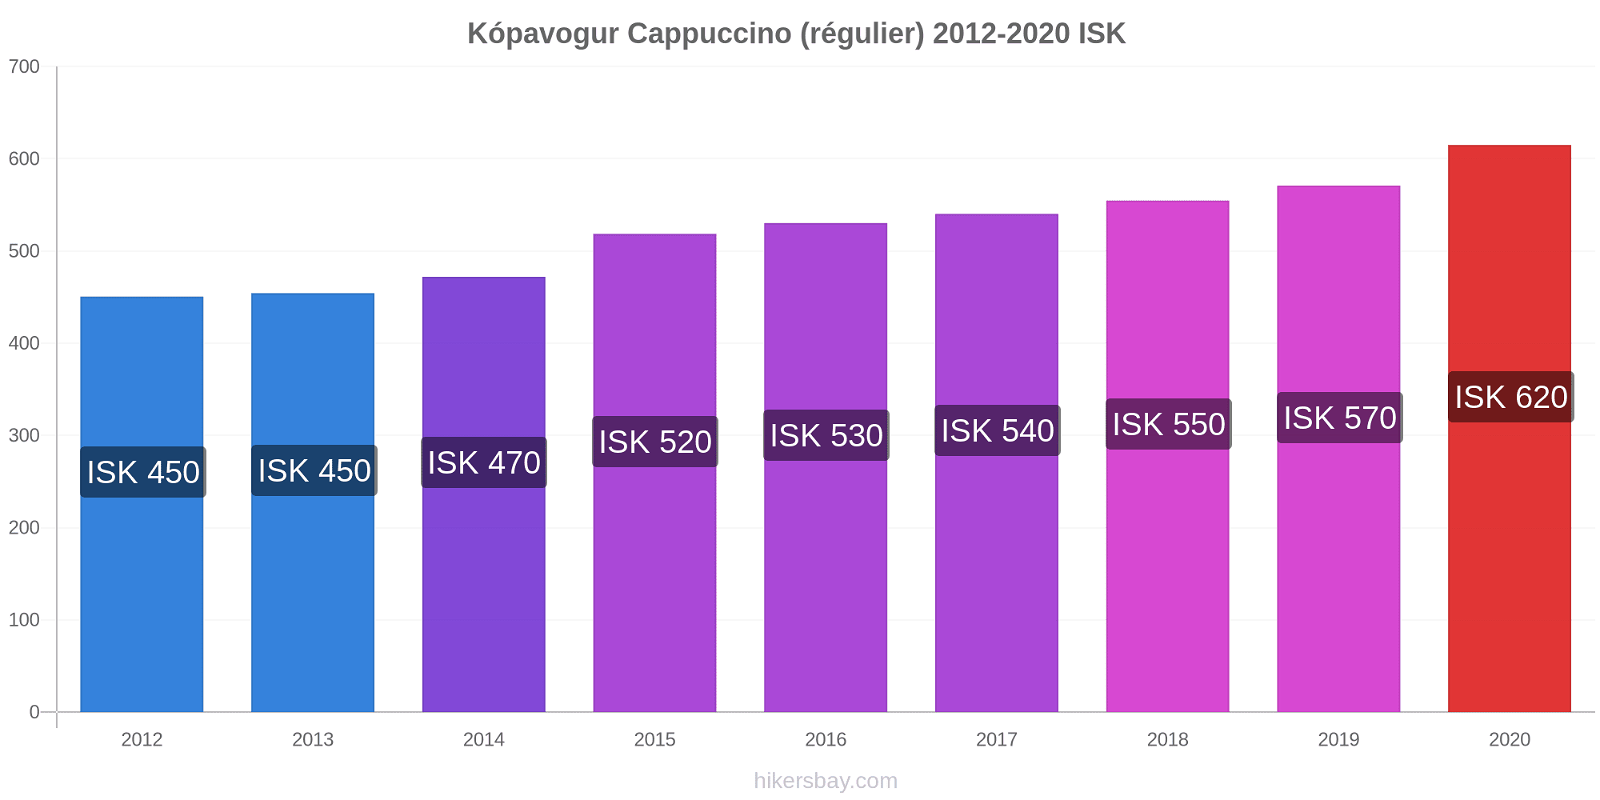 Kópavogur changements de prix Cappuccino (régulier) hikersbay.com